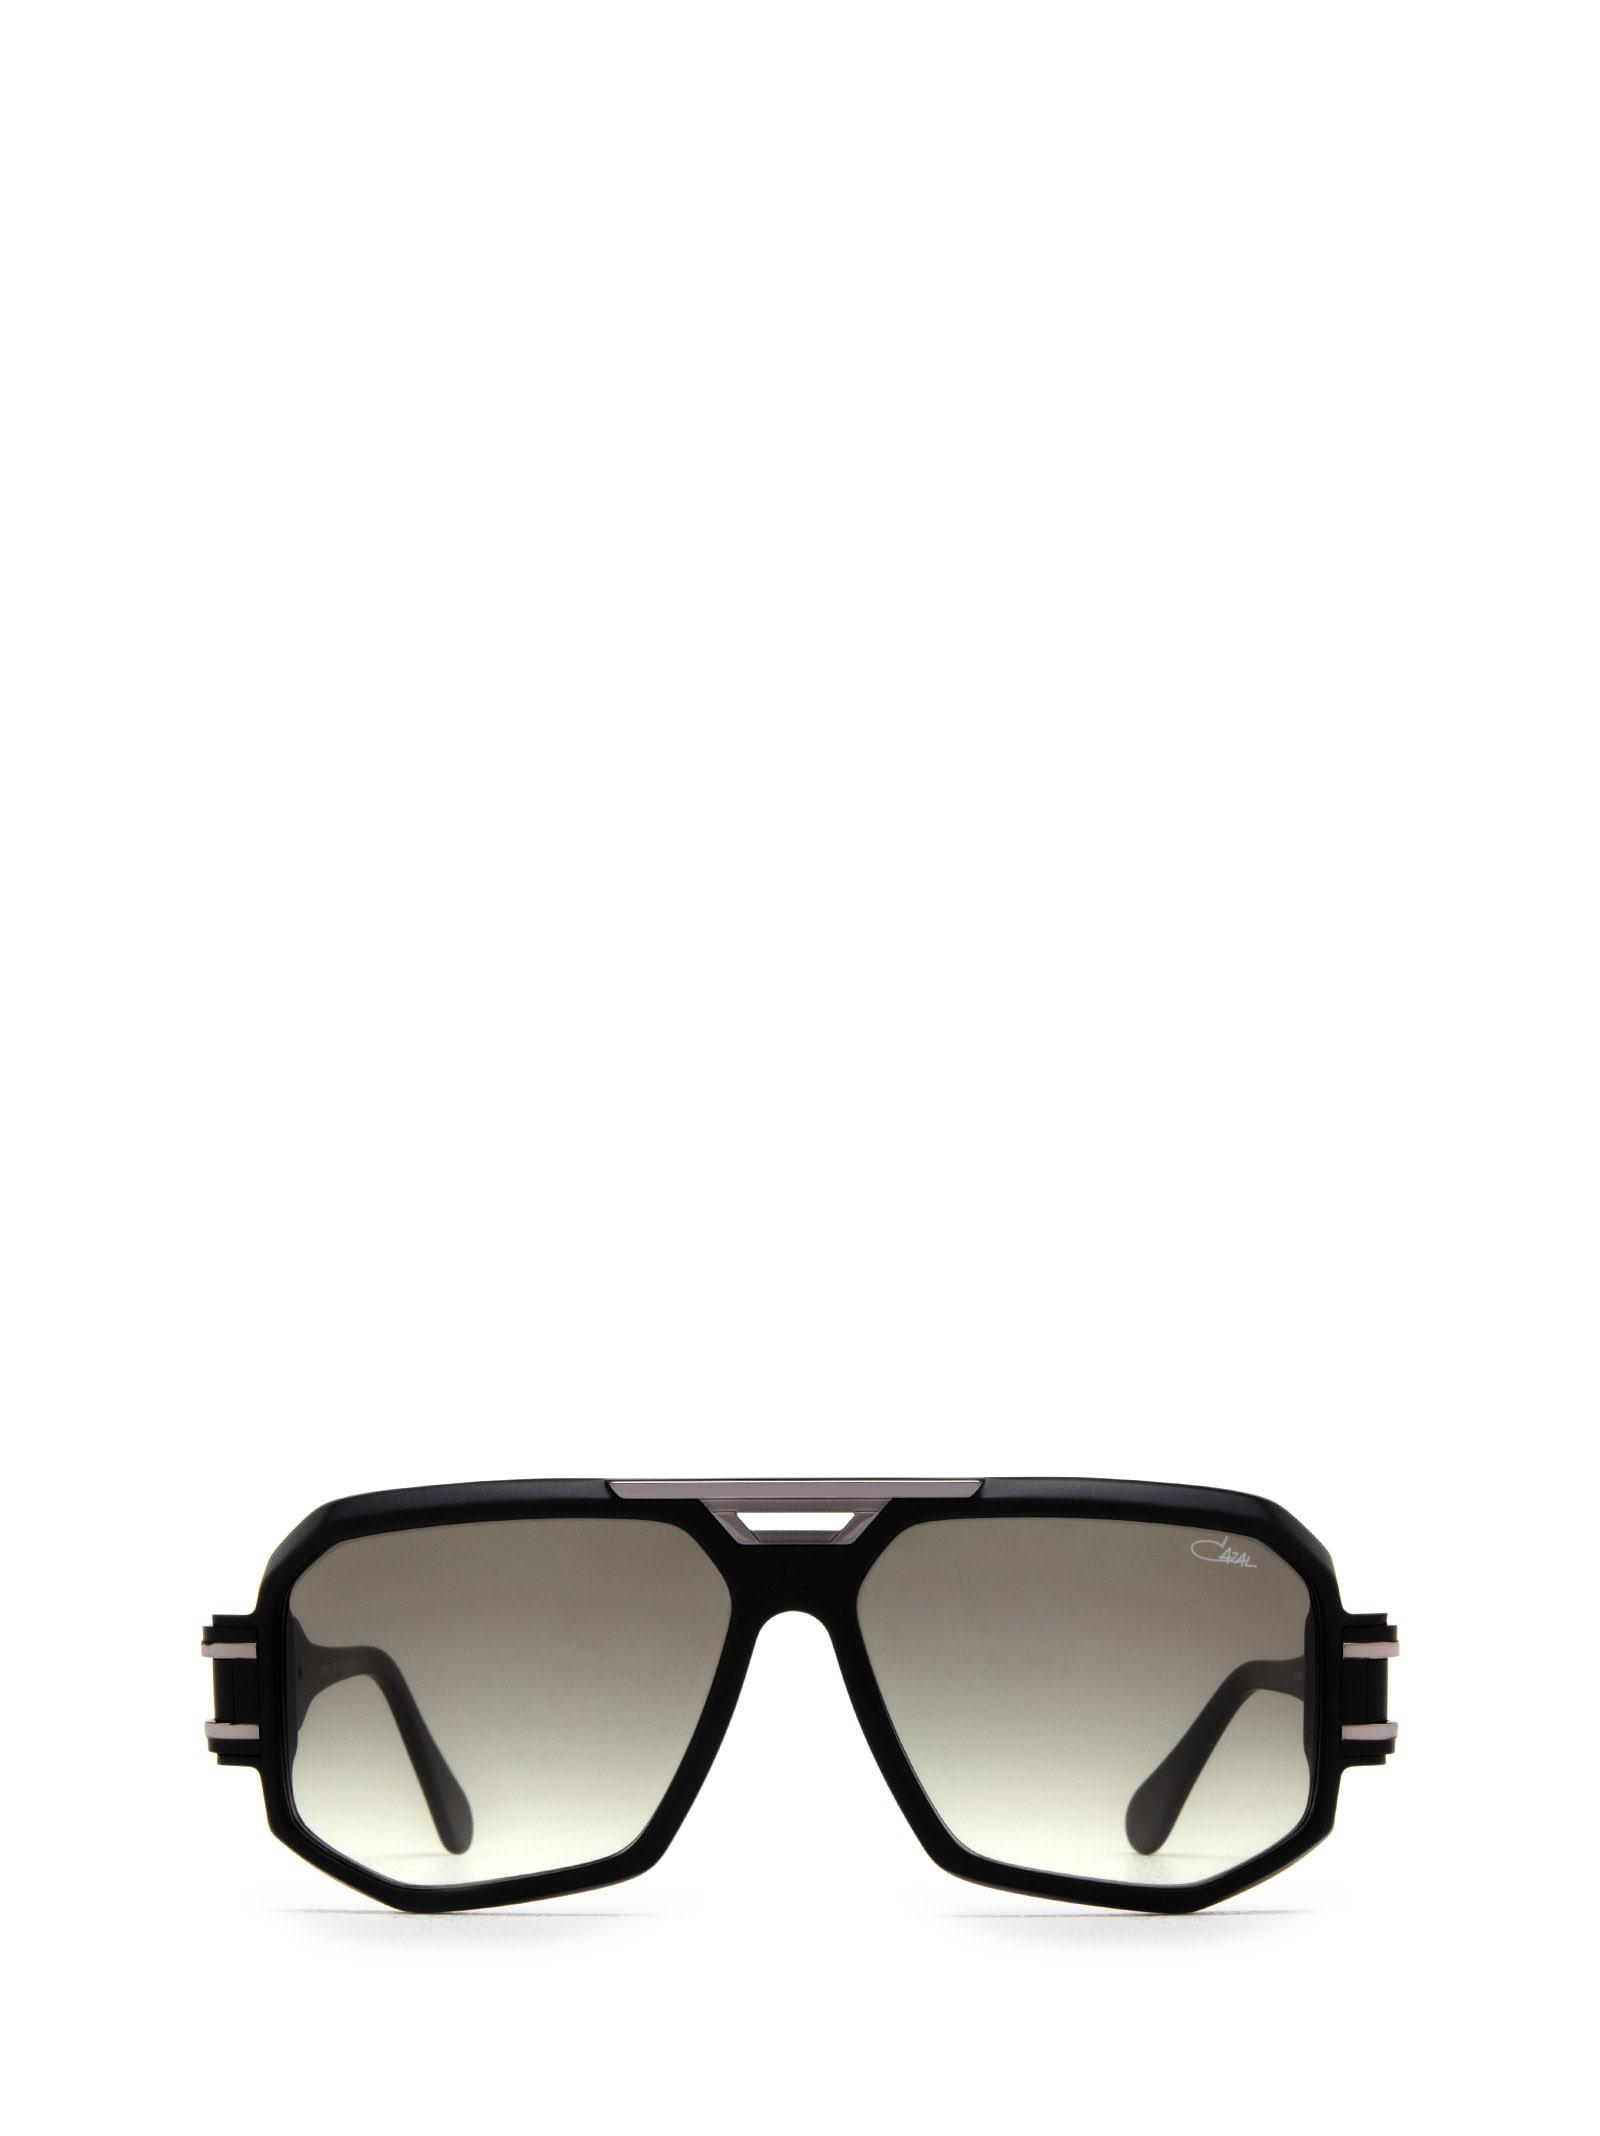 Cazal 675 Black - Gunmetal Sunglasses | Lyst